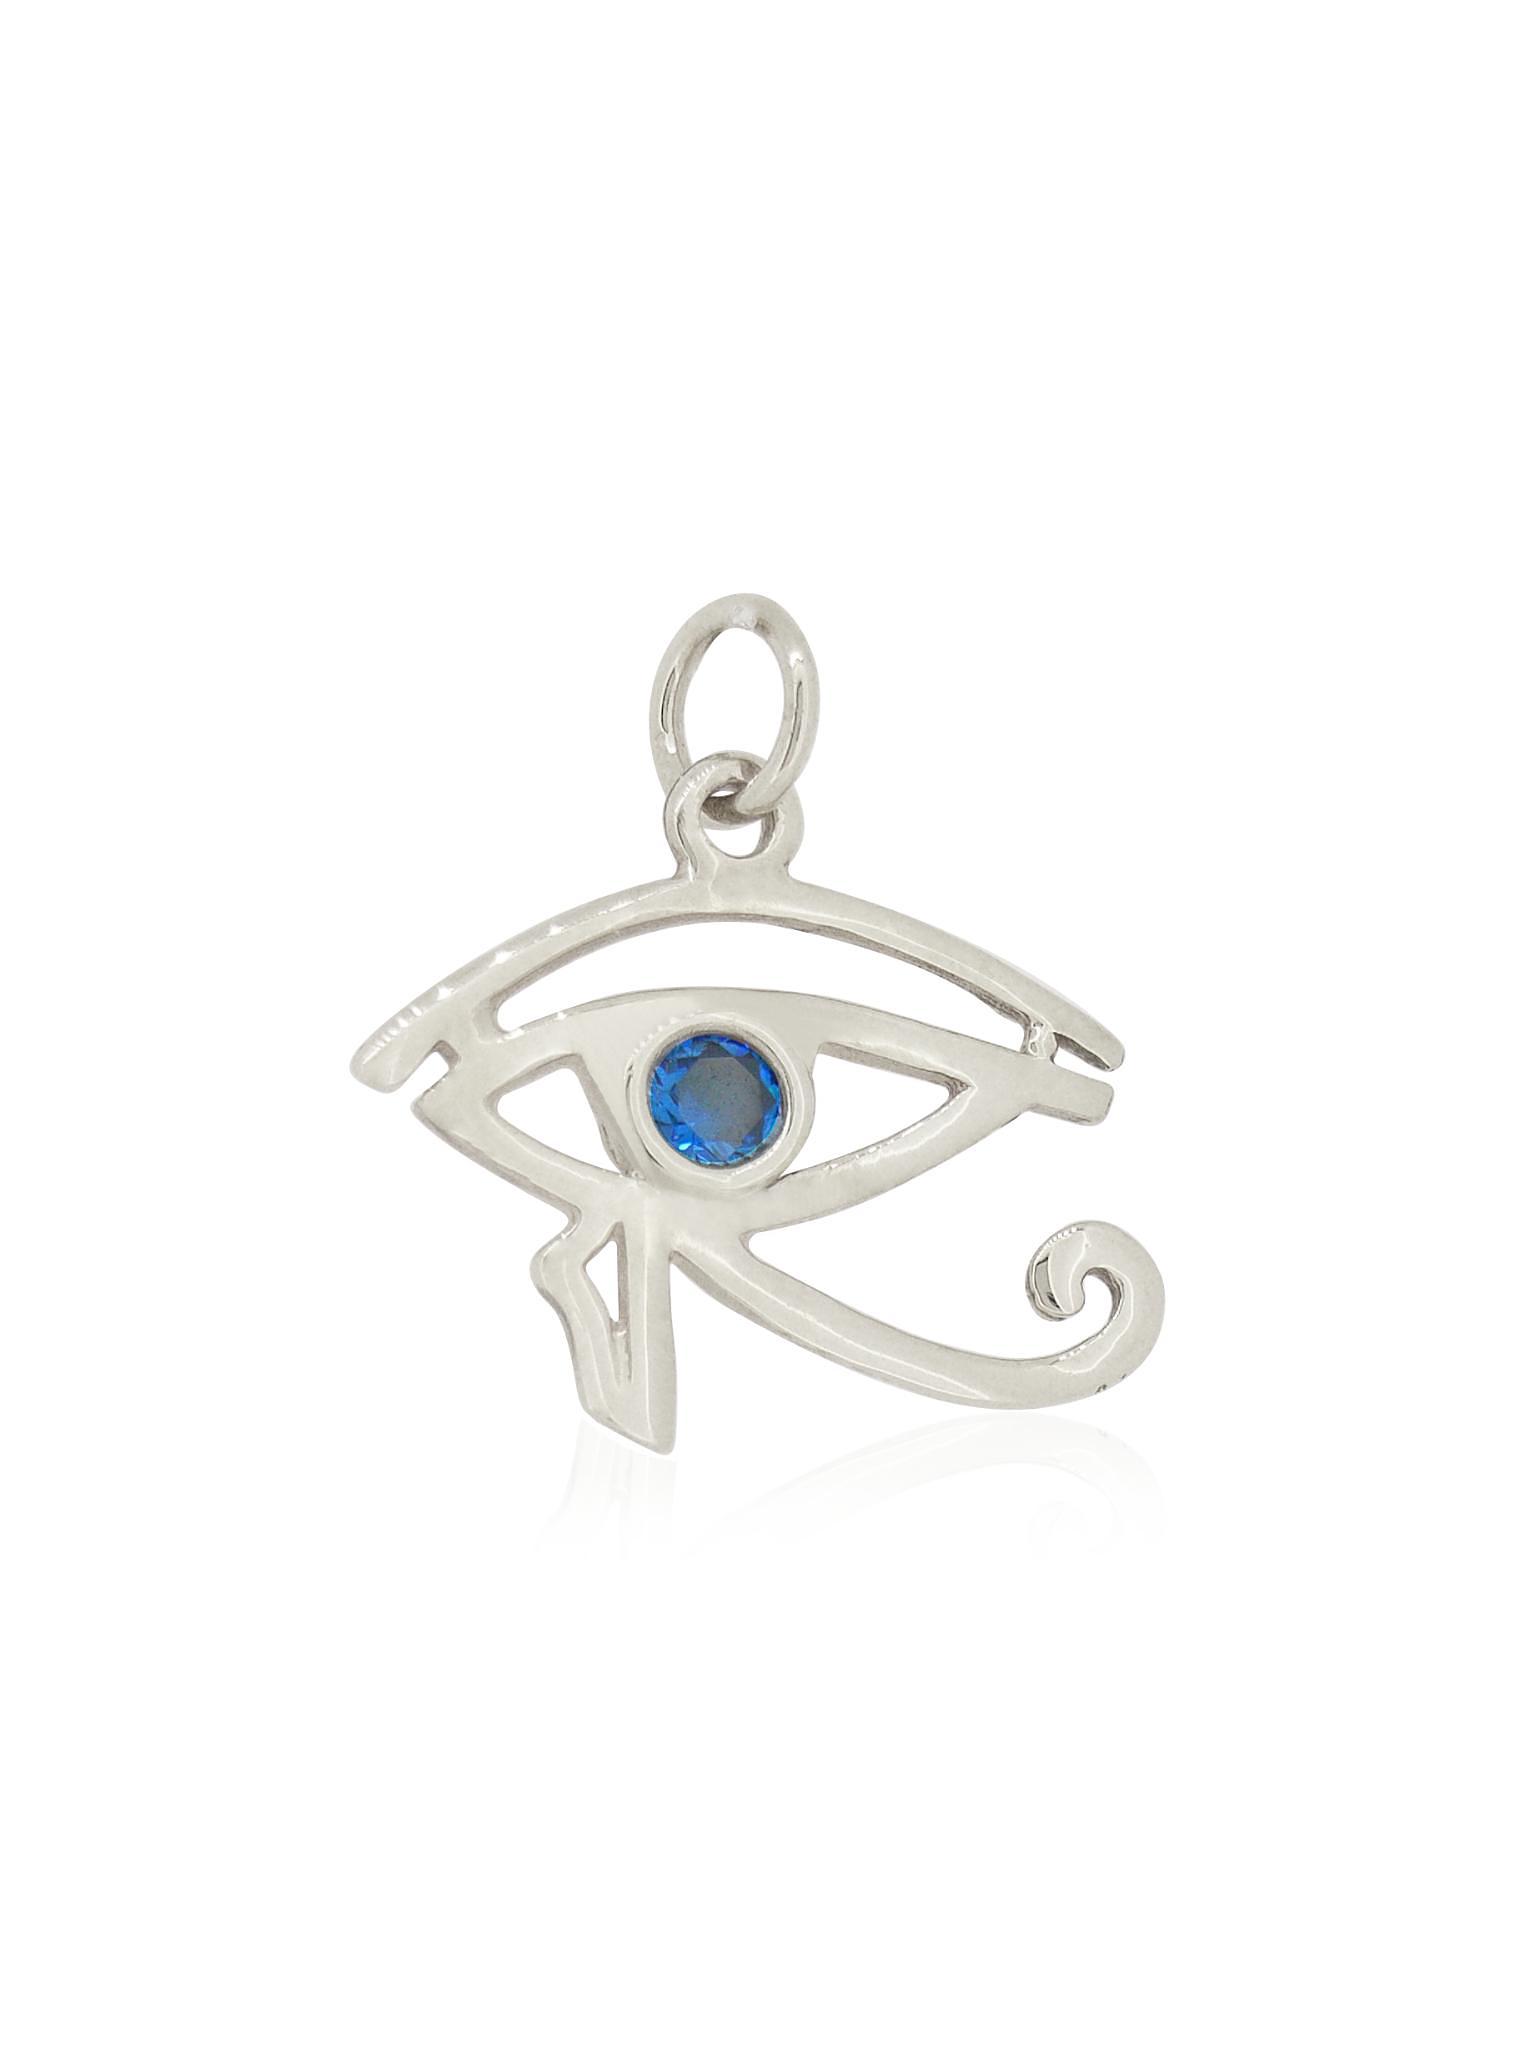 SUNNYCLUE 1 Box 24pcs Eye of Horus Charms Bulk Egyptian Eye Charm Stainless Steel Eyes Charm Metal Magic Spiritual Charms for